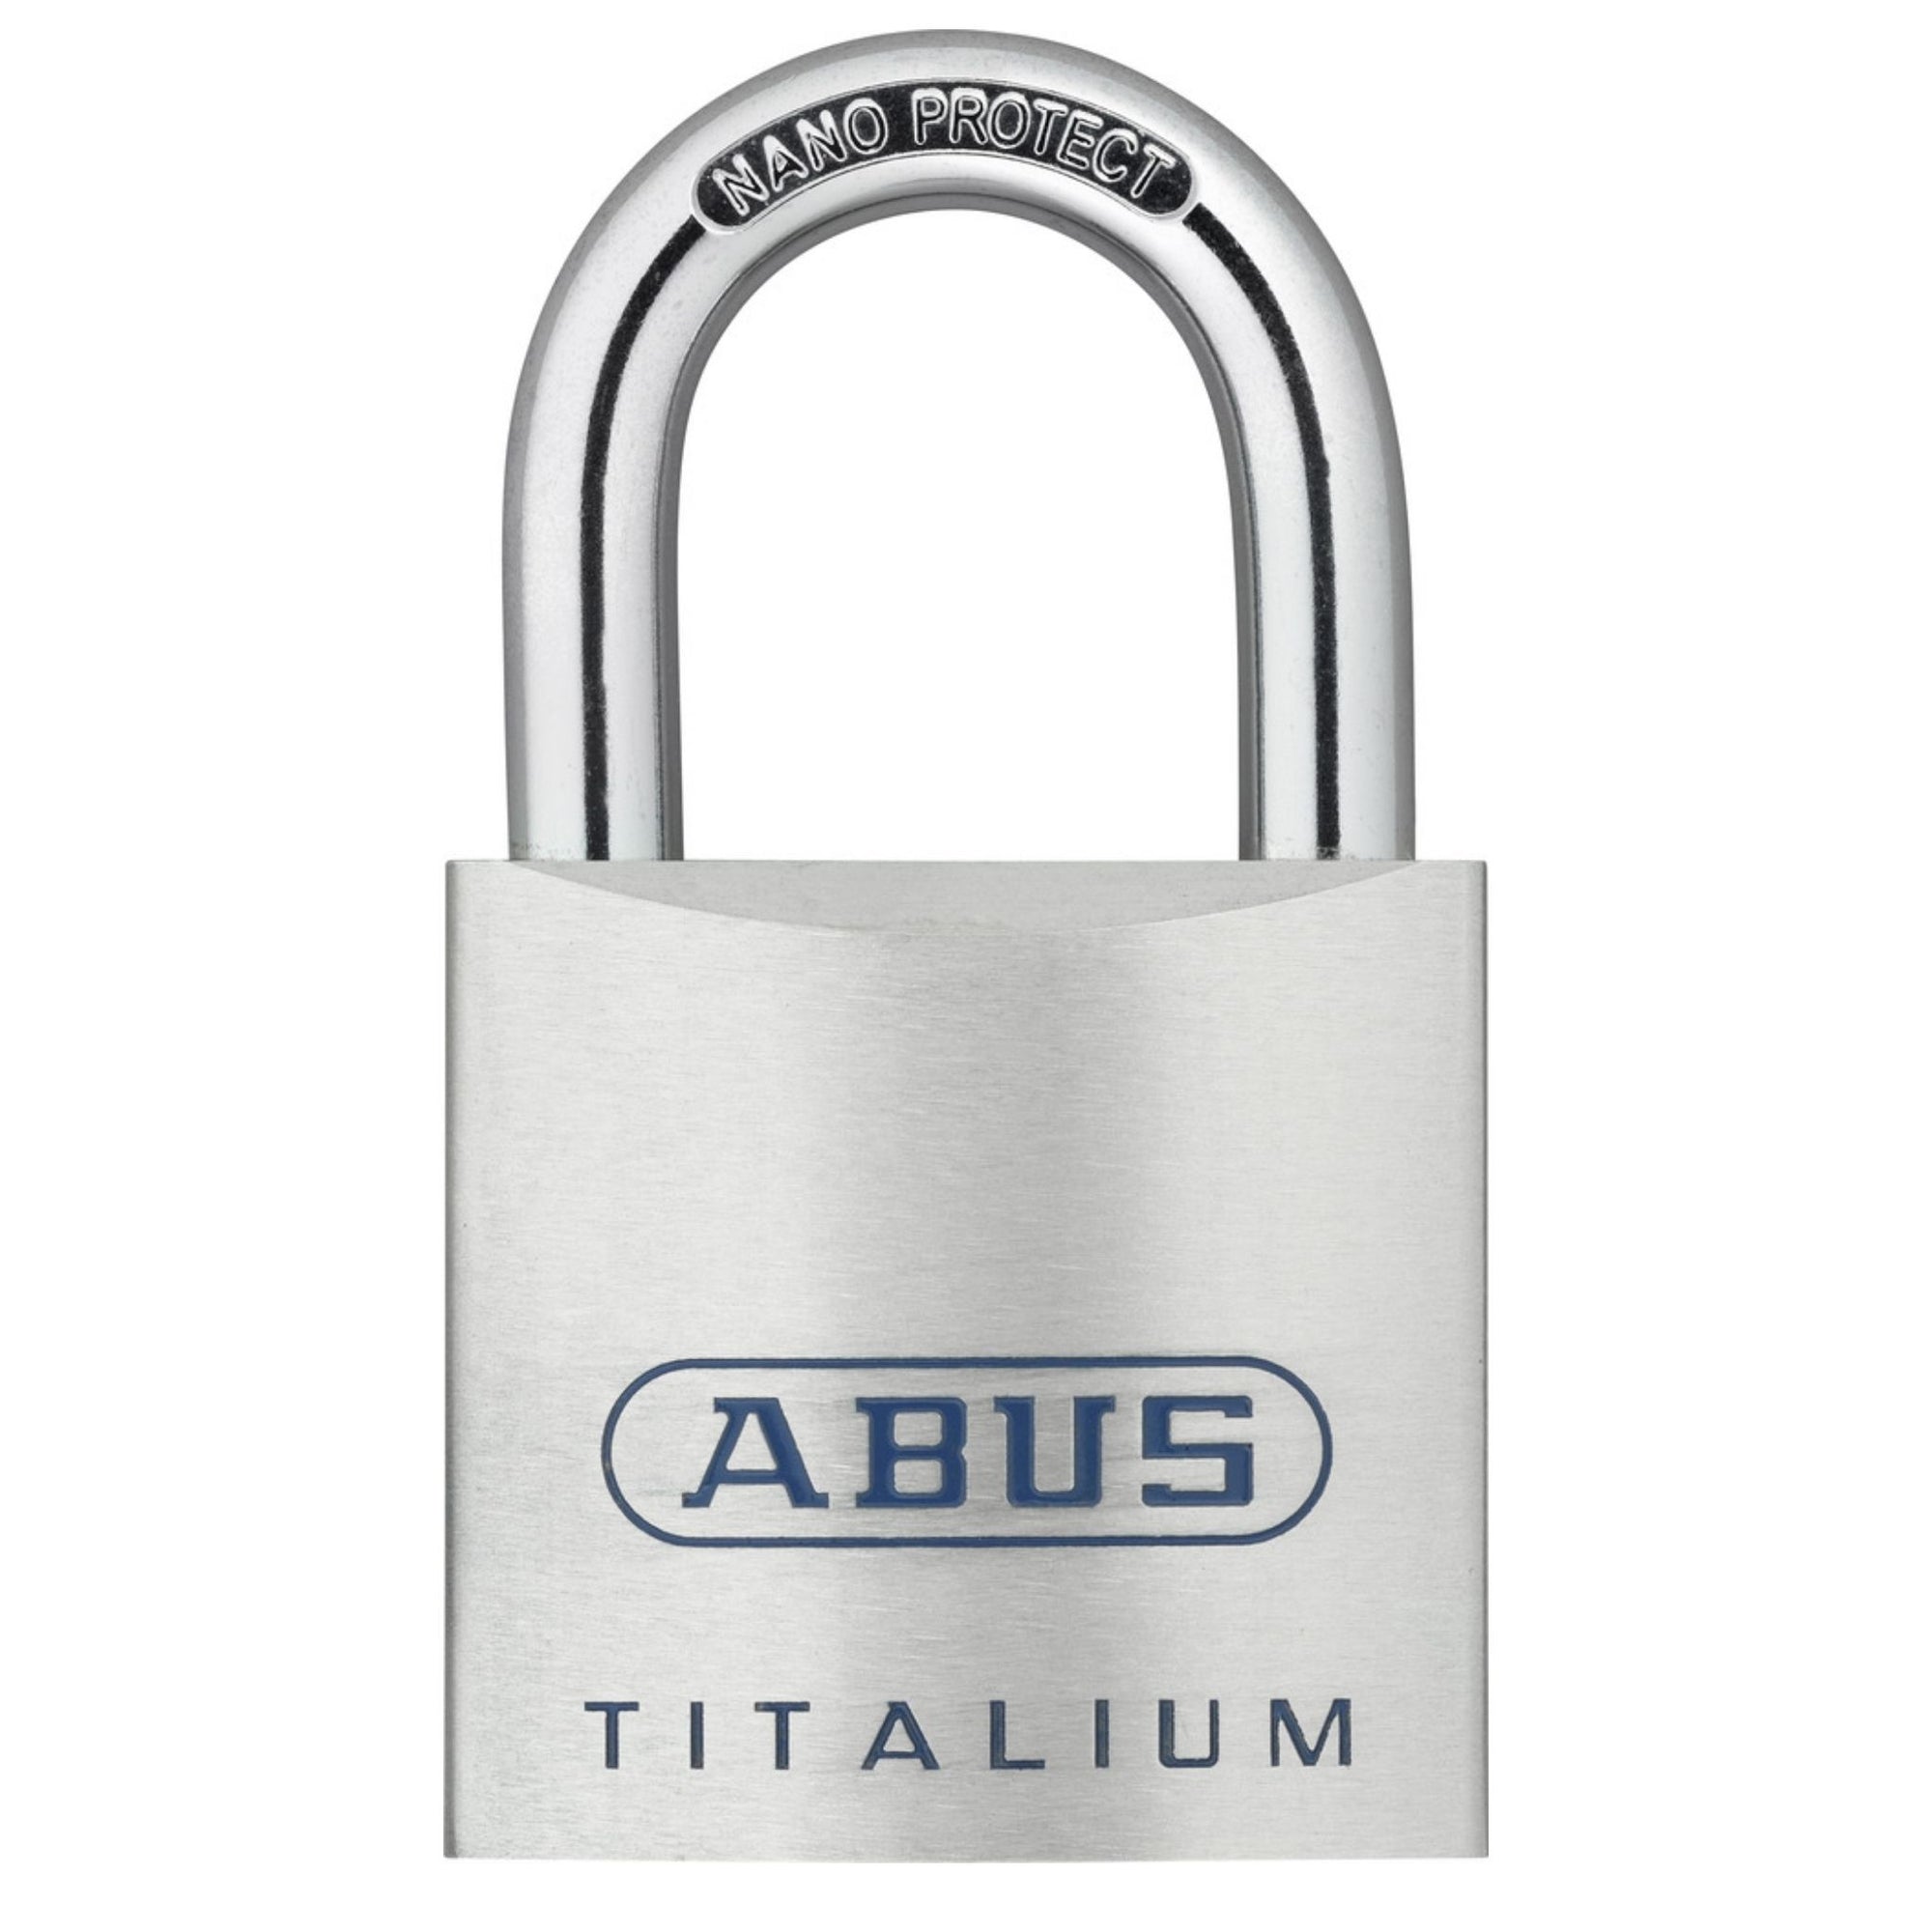 Abus 80TI/45 KA 8011 Lock Titalium Padlocks Keyed Alike to Match Existing Key Number KA8011 - The Lock Source